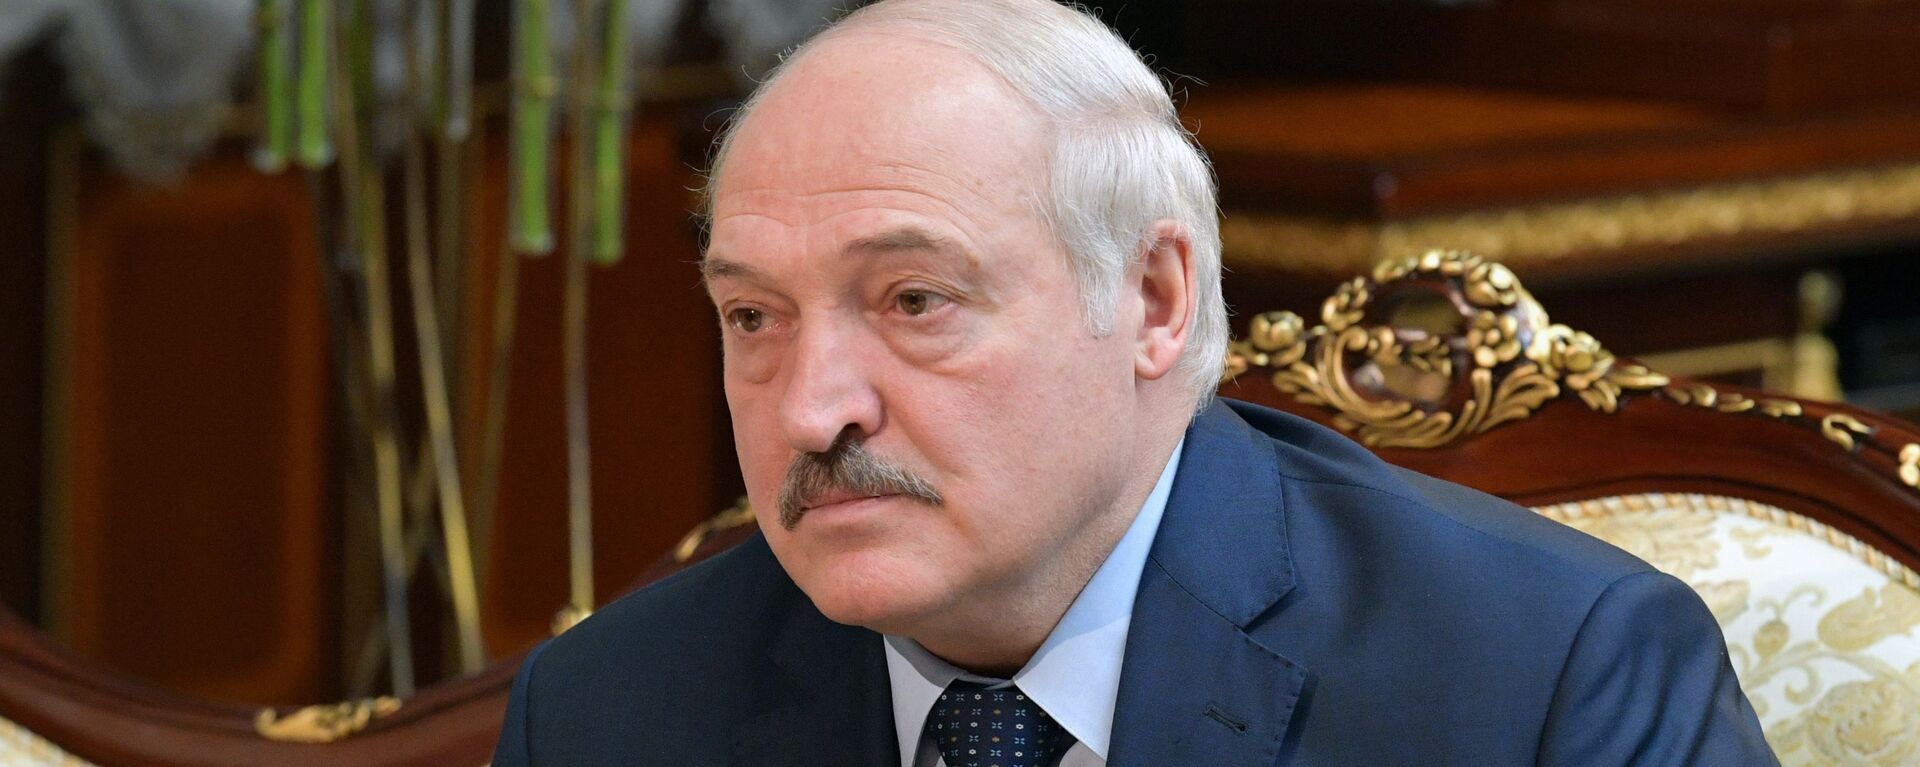 Tổng thống Belarus Alexander Lukashenko. - Sputnik Việt Nam, 1920, 26.05.2021